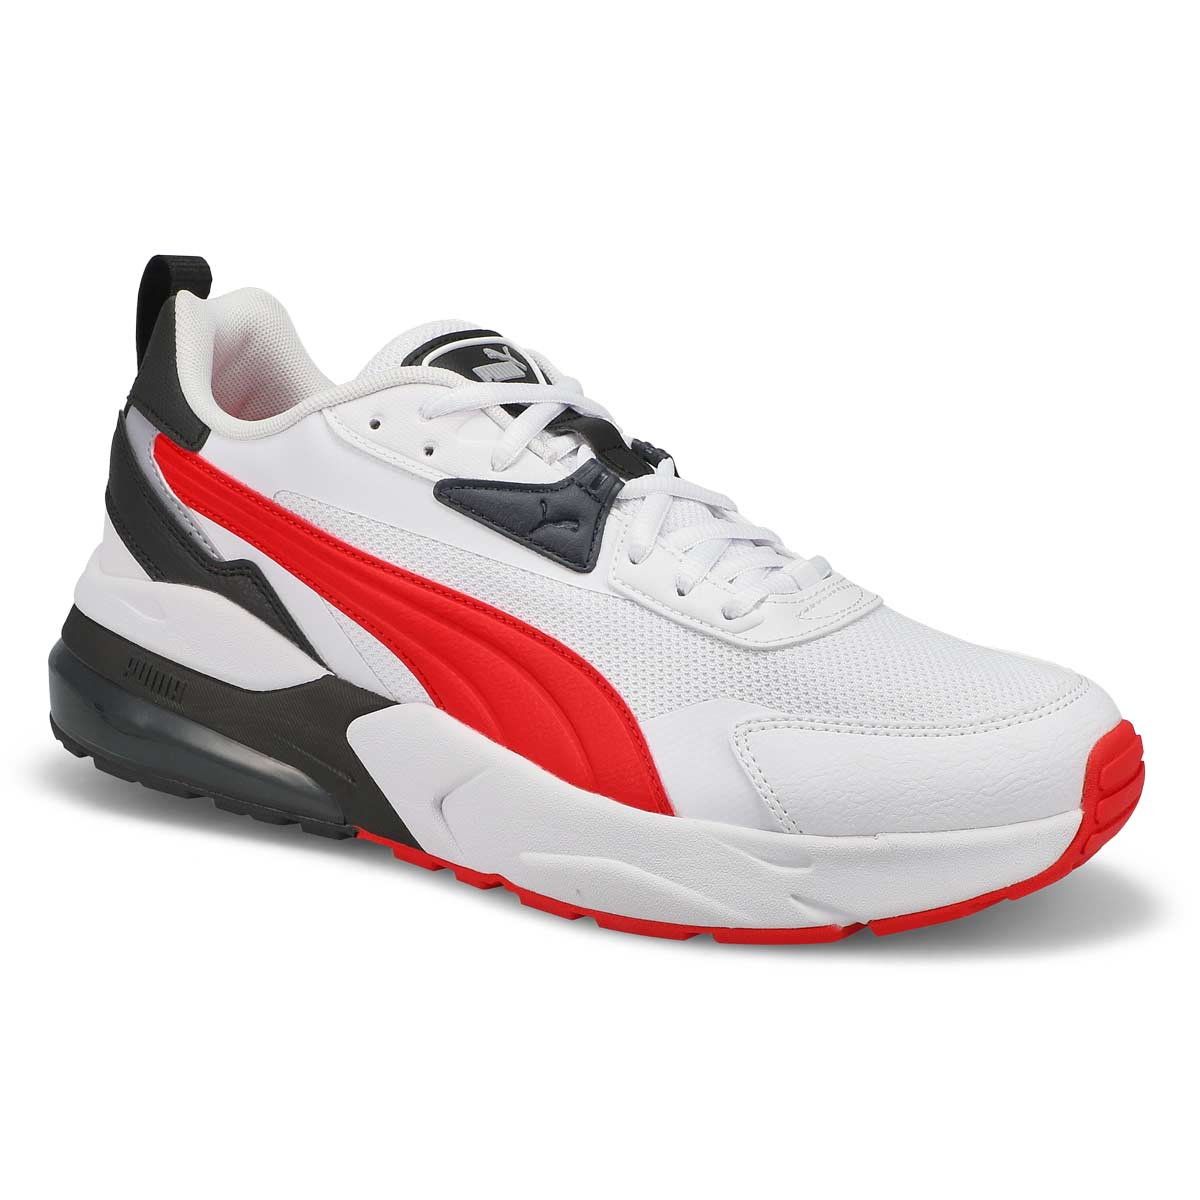 Men's Vis2k Lace Up Sneaker - White/Red/Black